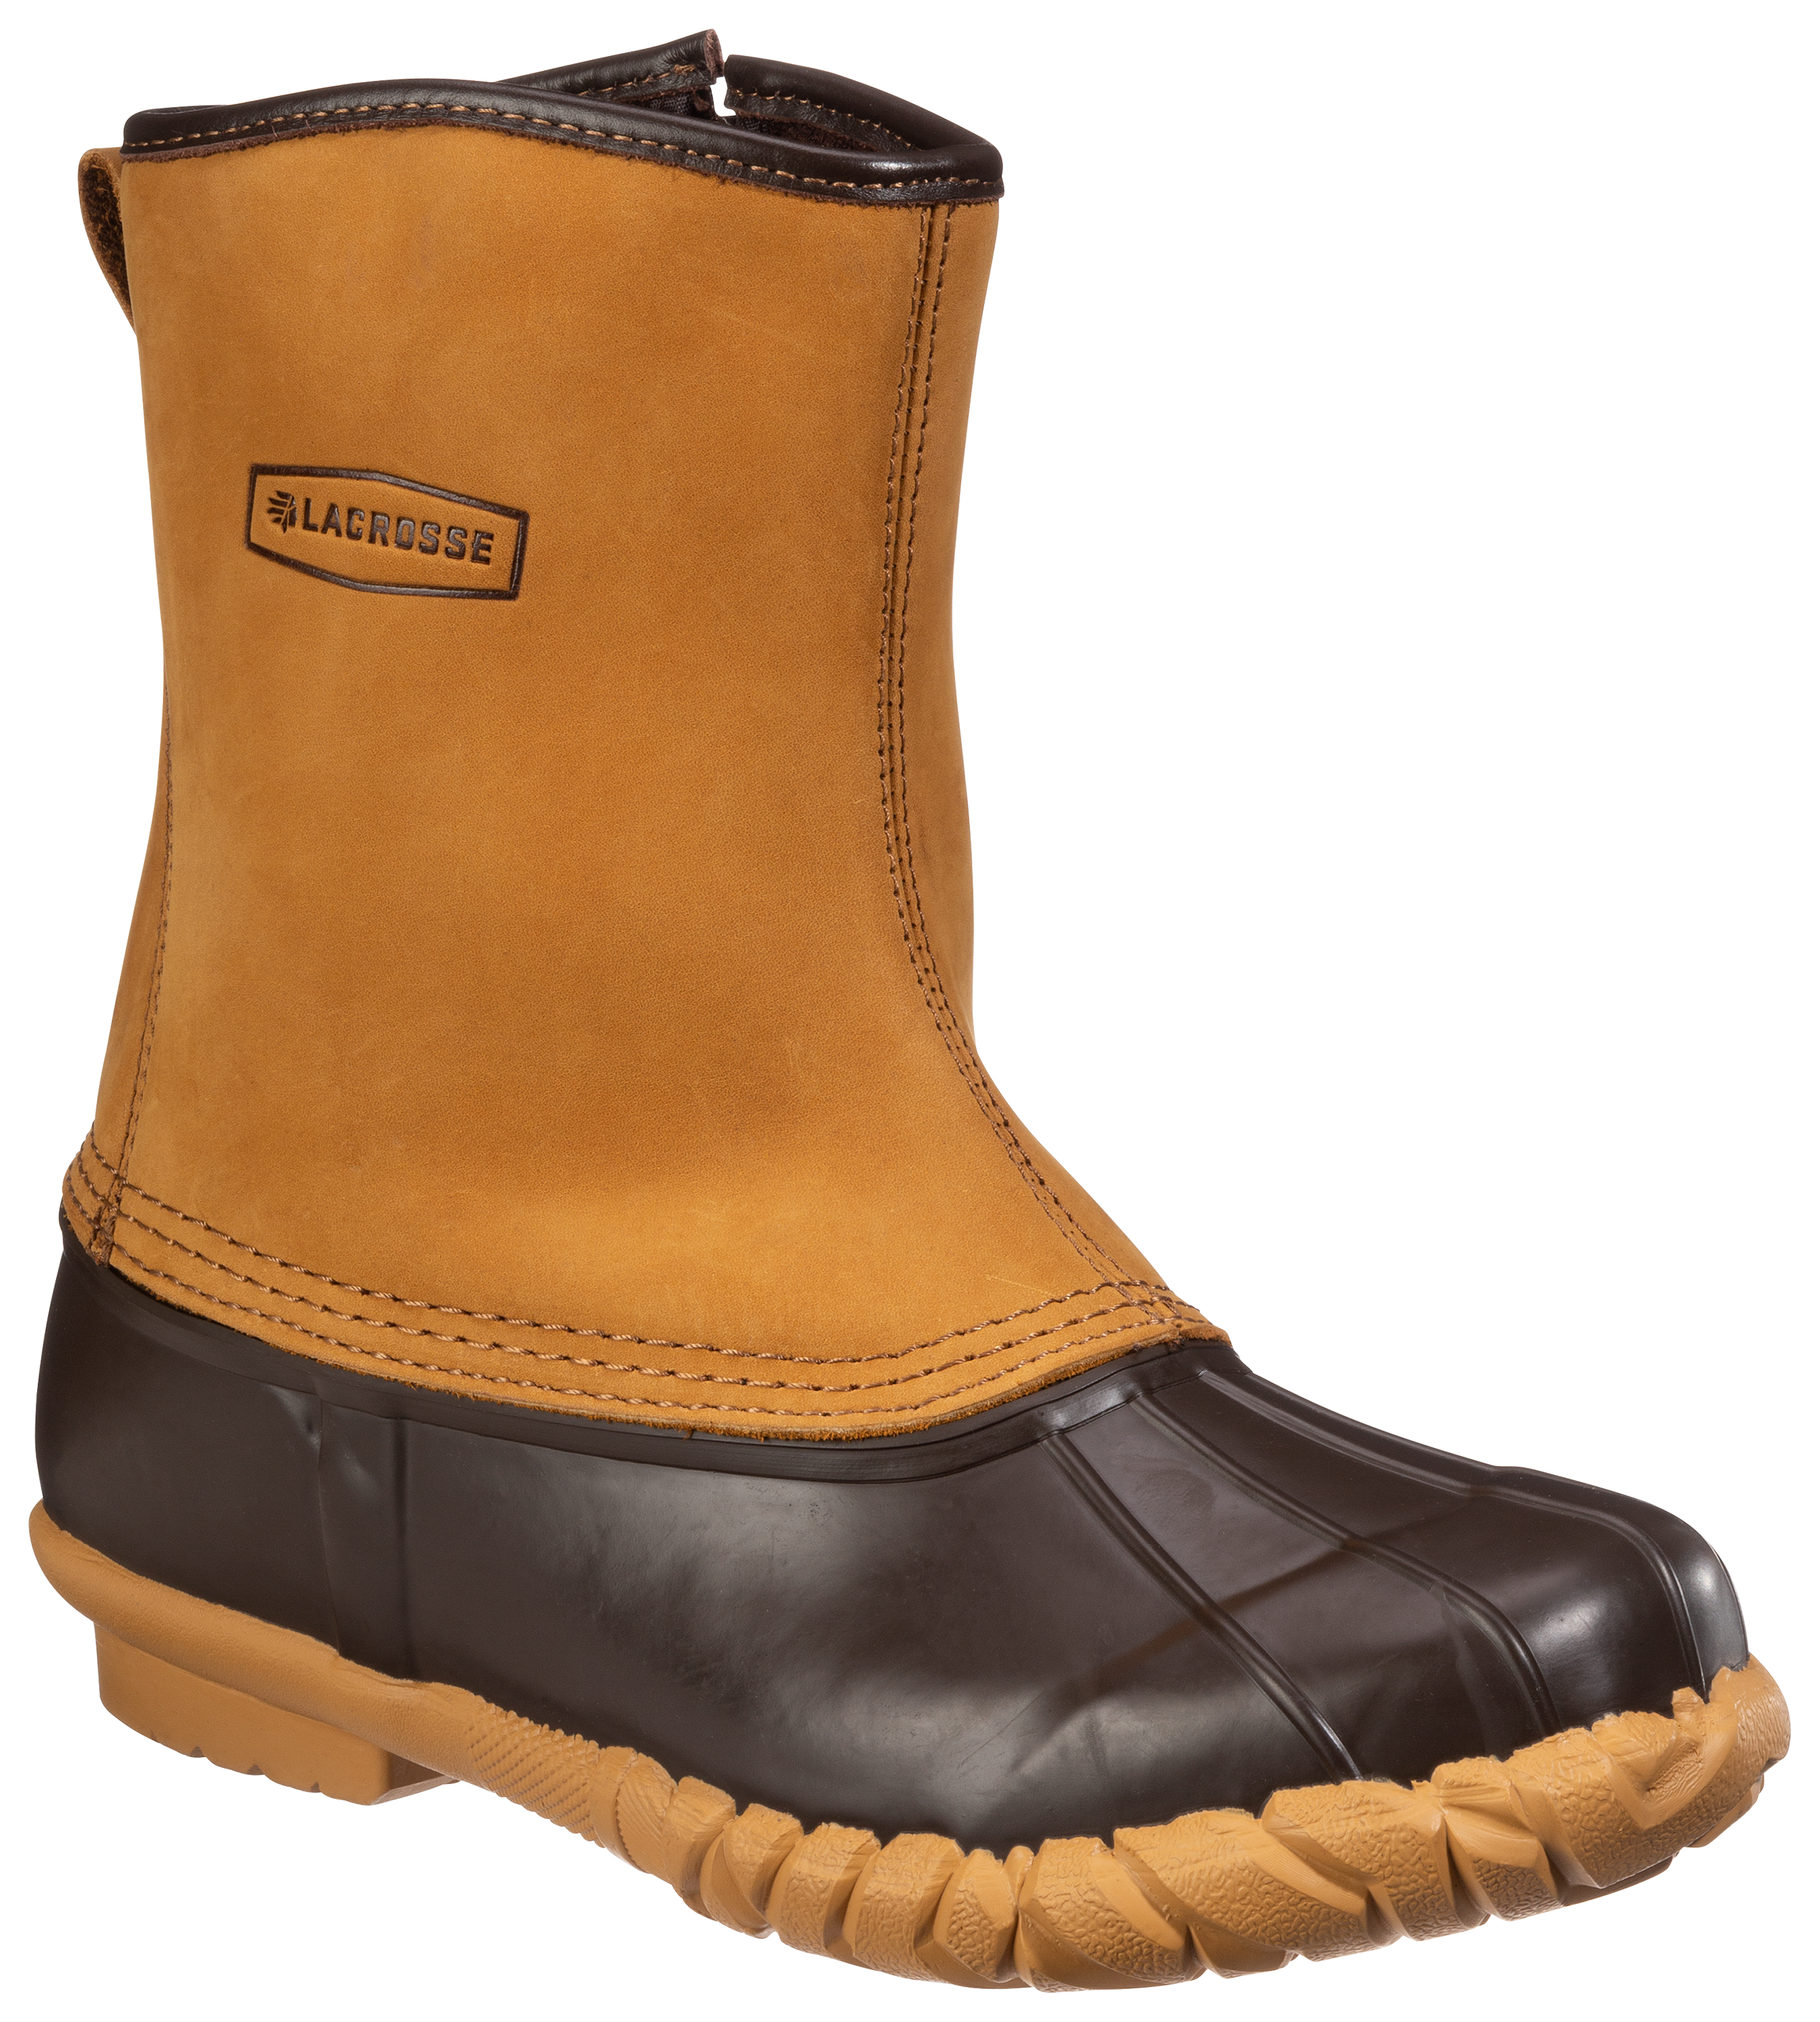 LaCrosse Mesquite II Insulated Waterproof Side-Zip Boots for Men - Brown - 14M